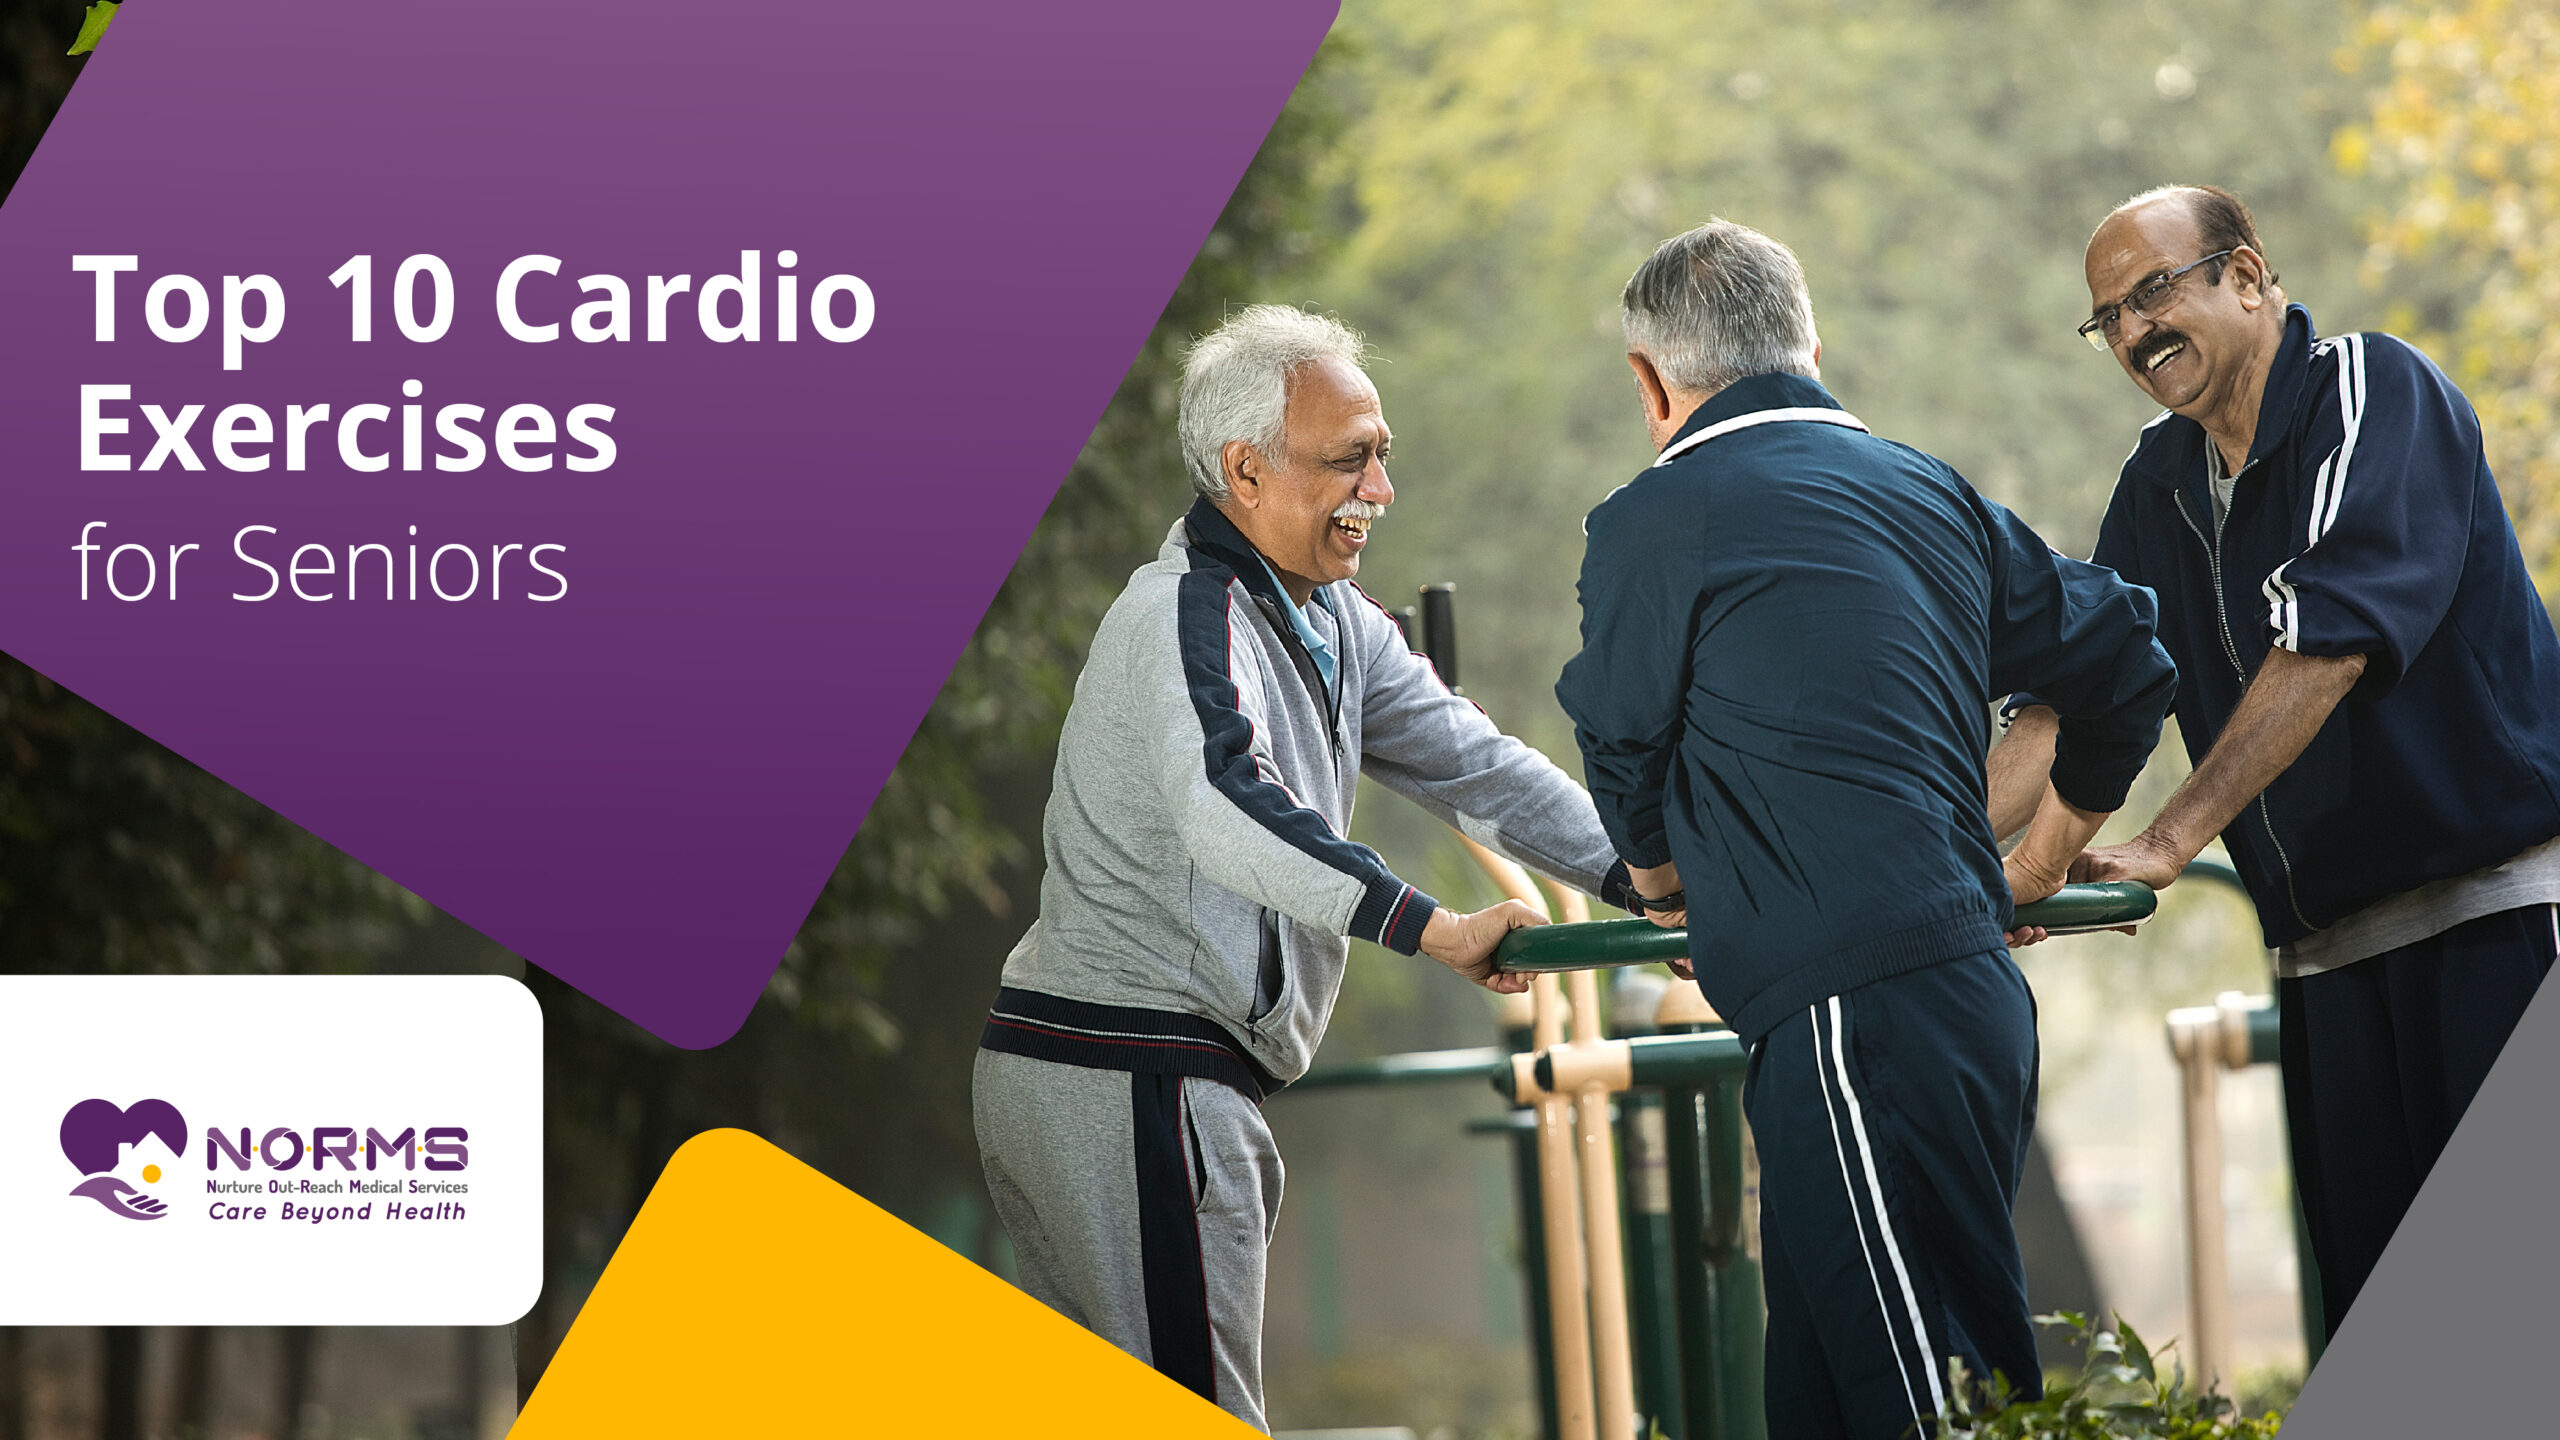 Top 10 Cardio Exercises for Seniors